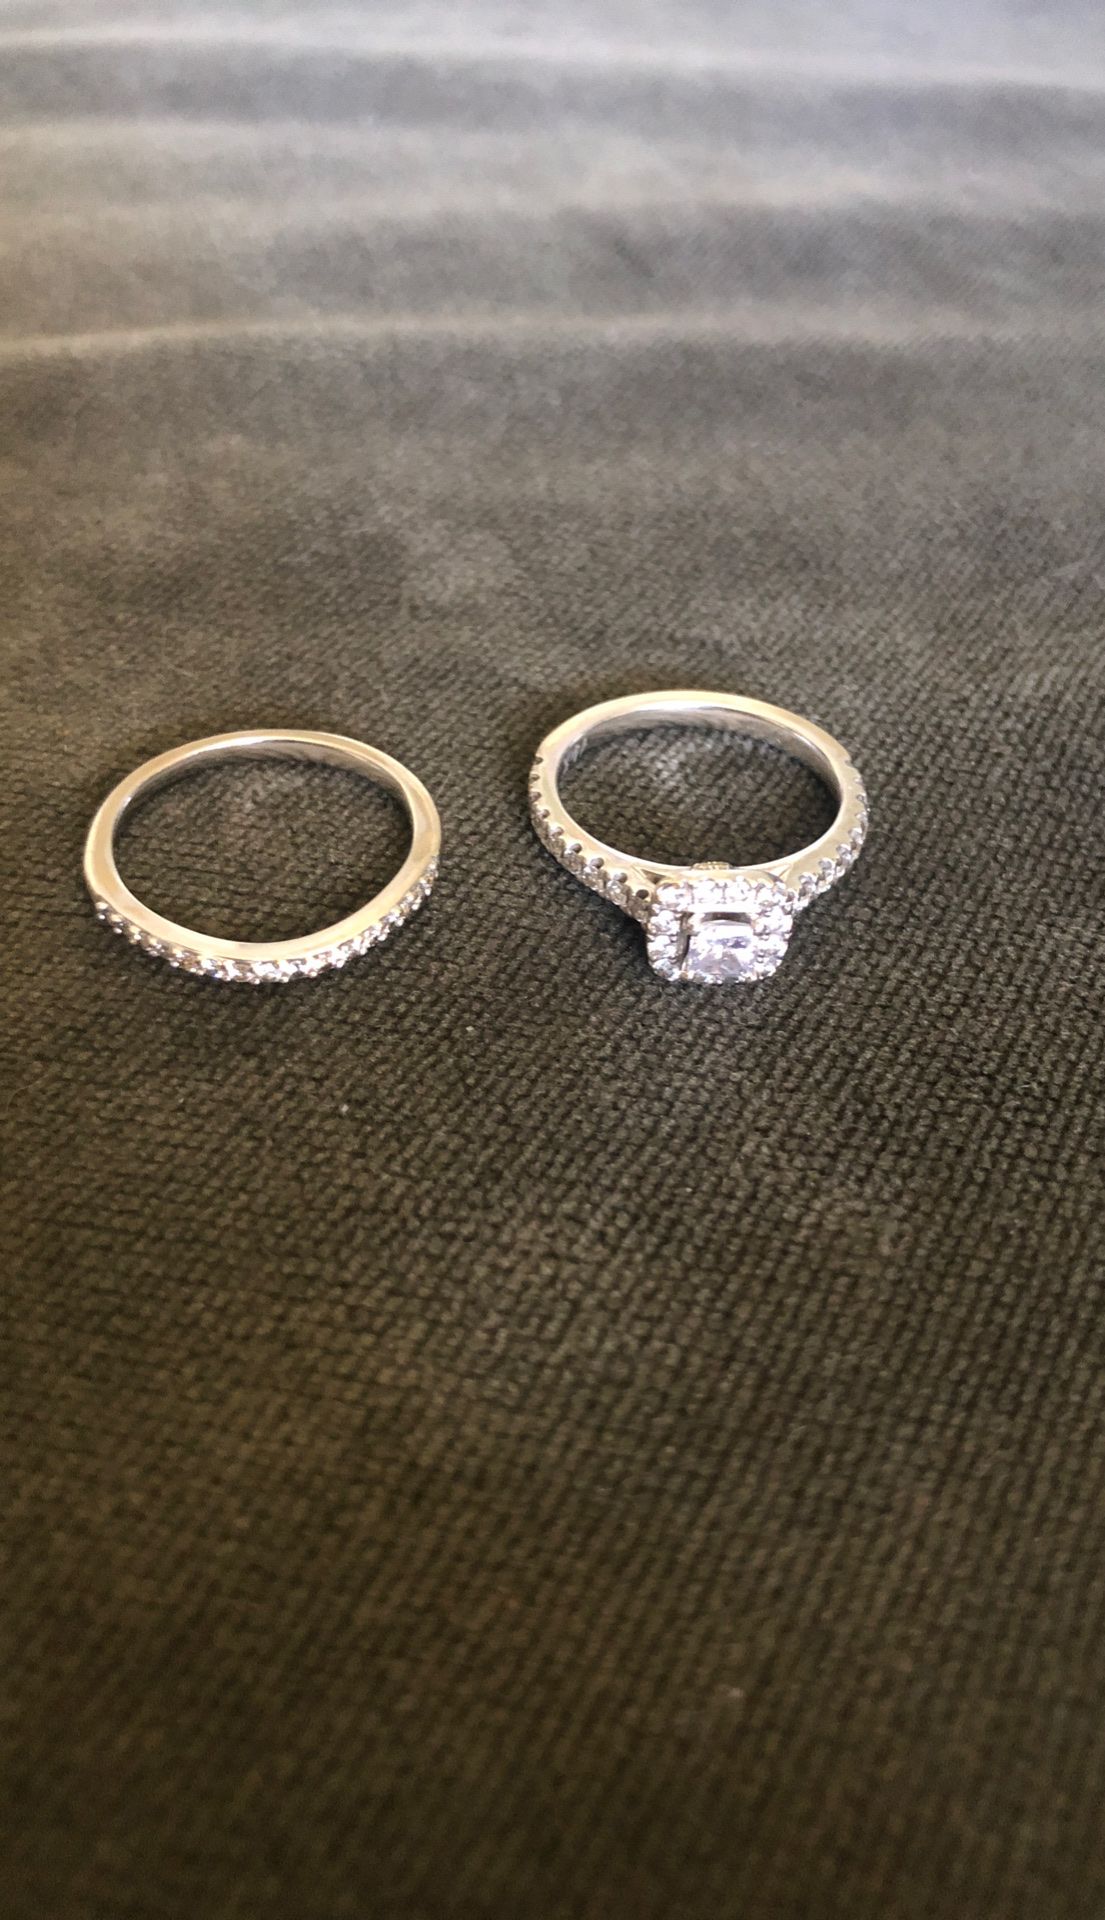 Wedding rings 14k